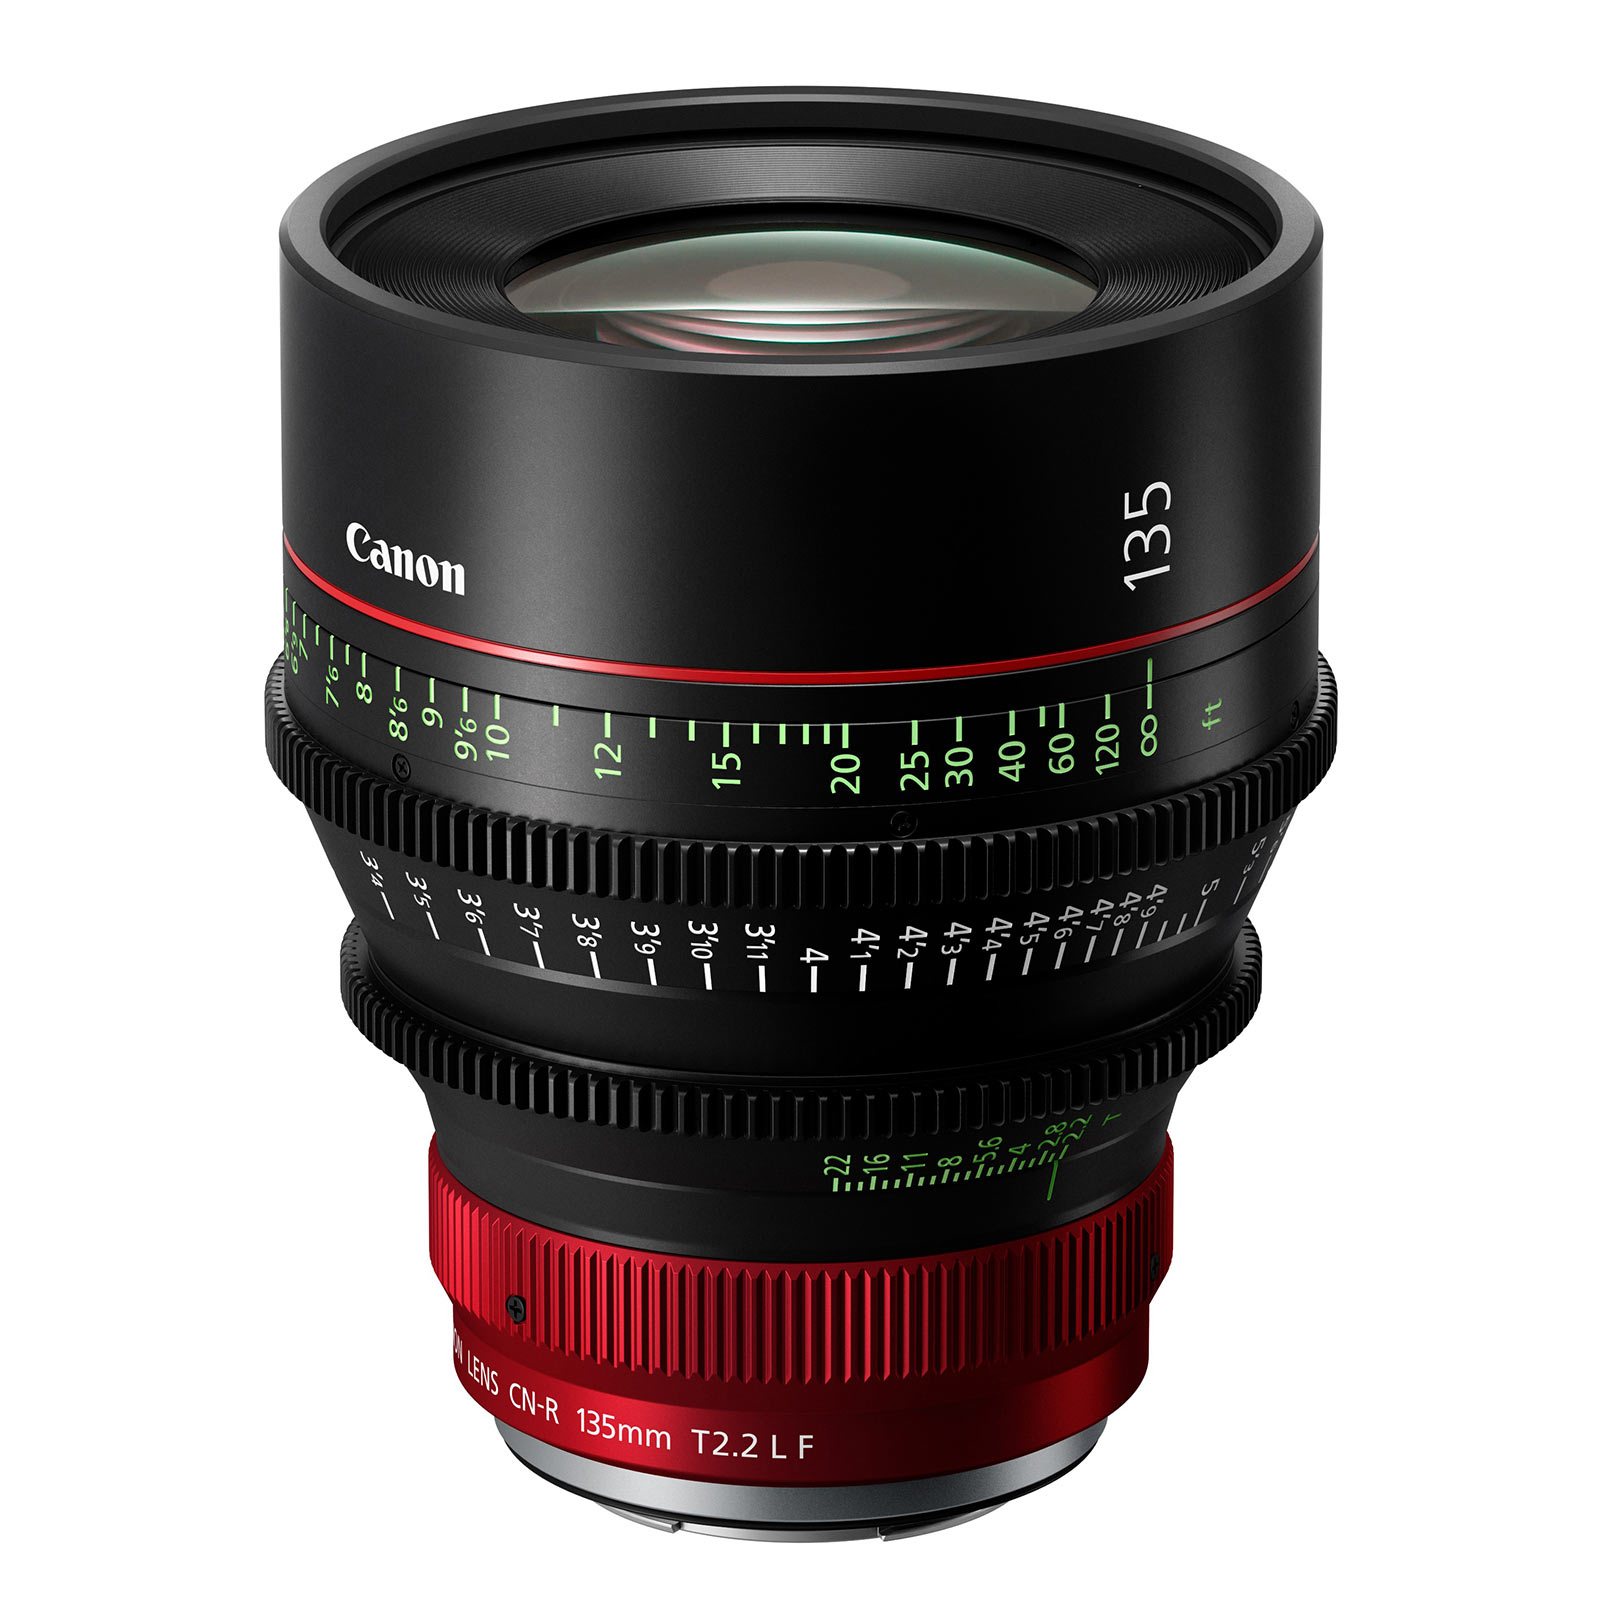 Image of Canon CN-R135mm T2.2 L F Cine Prime Lens